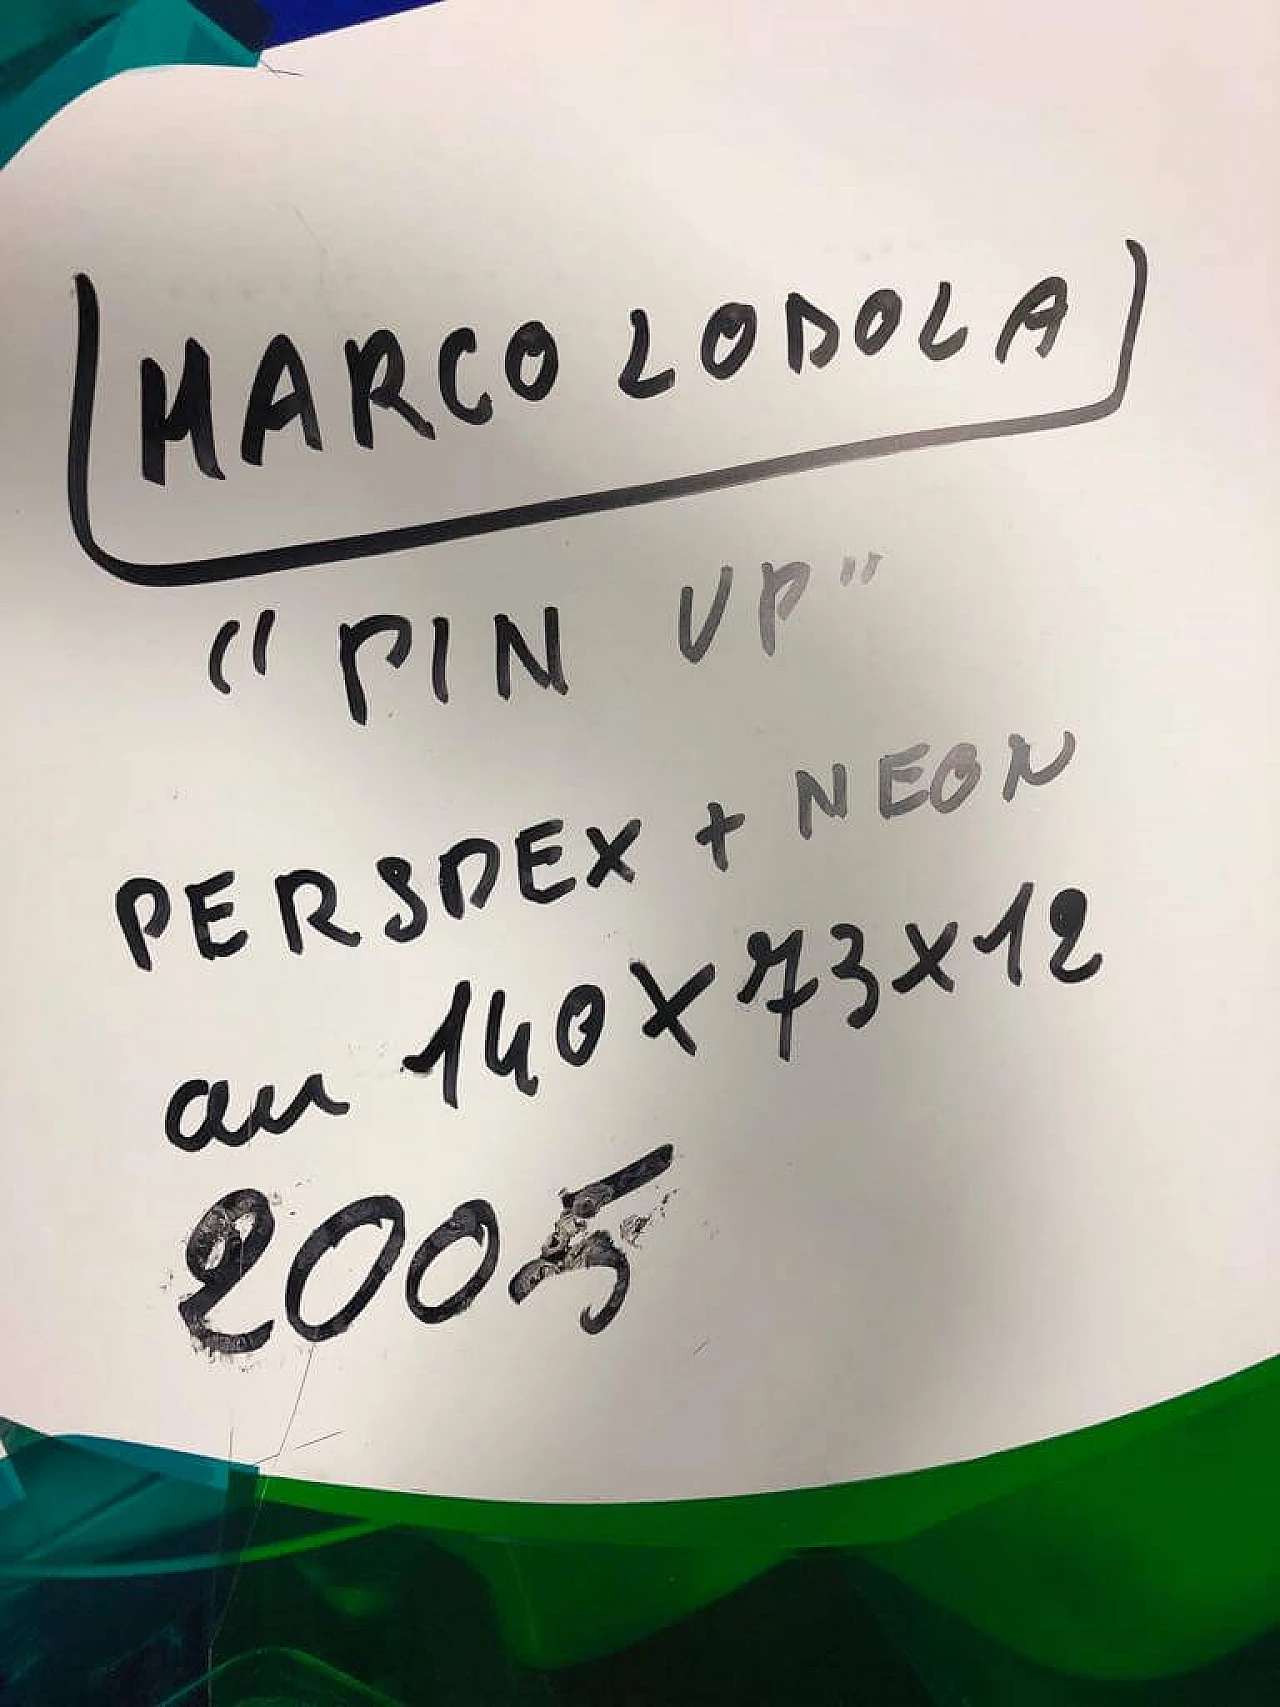 Opera "Pin Up" di Marco Lodola, 2005 1064031